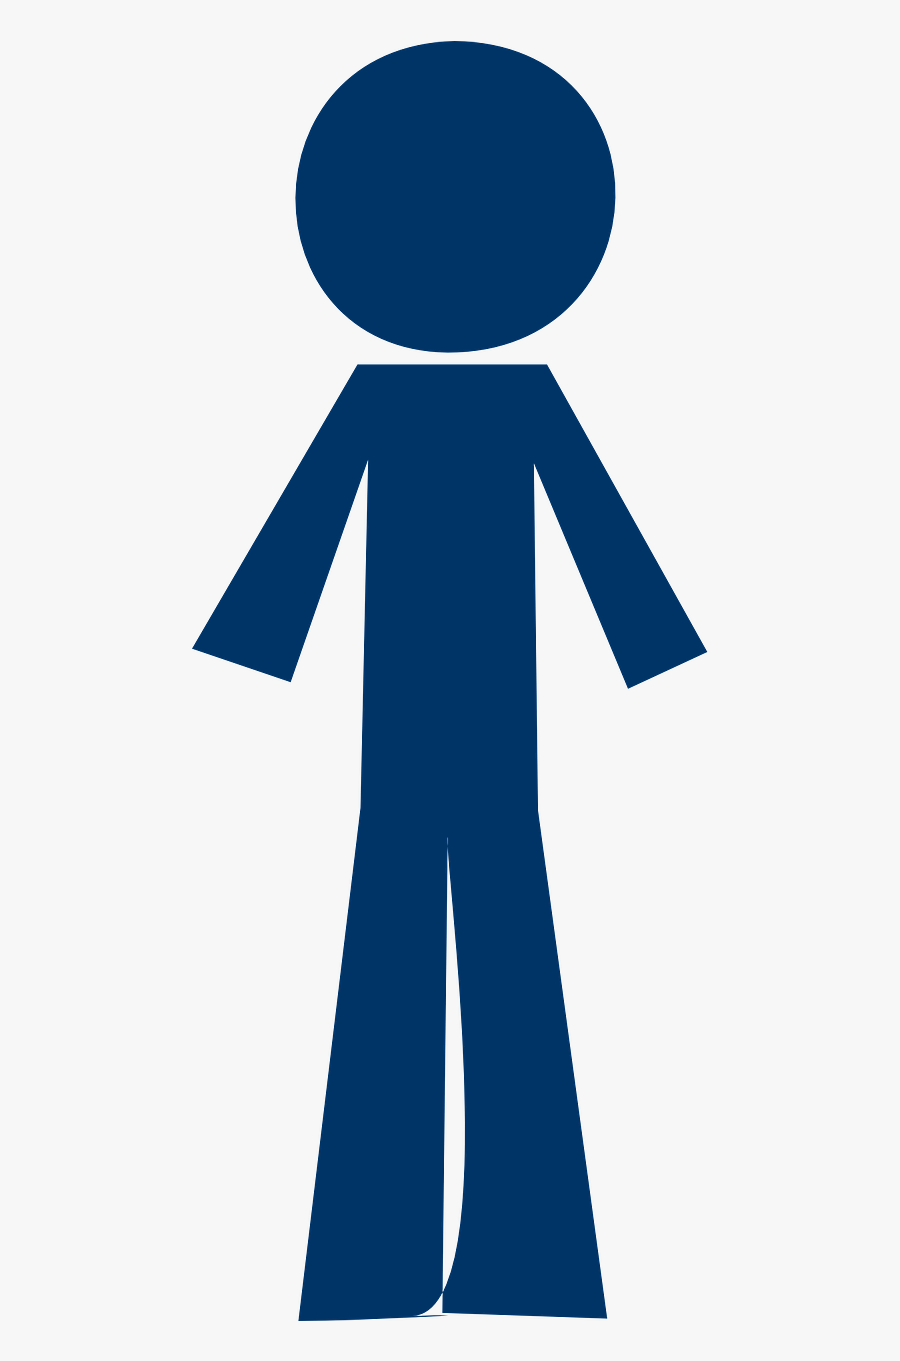 User Stick Man Person Free Photo - Navy Blue Stick Figure, Transparent Clipart